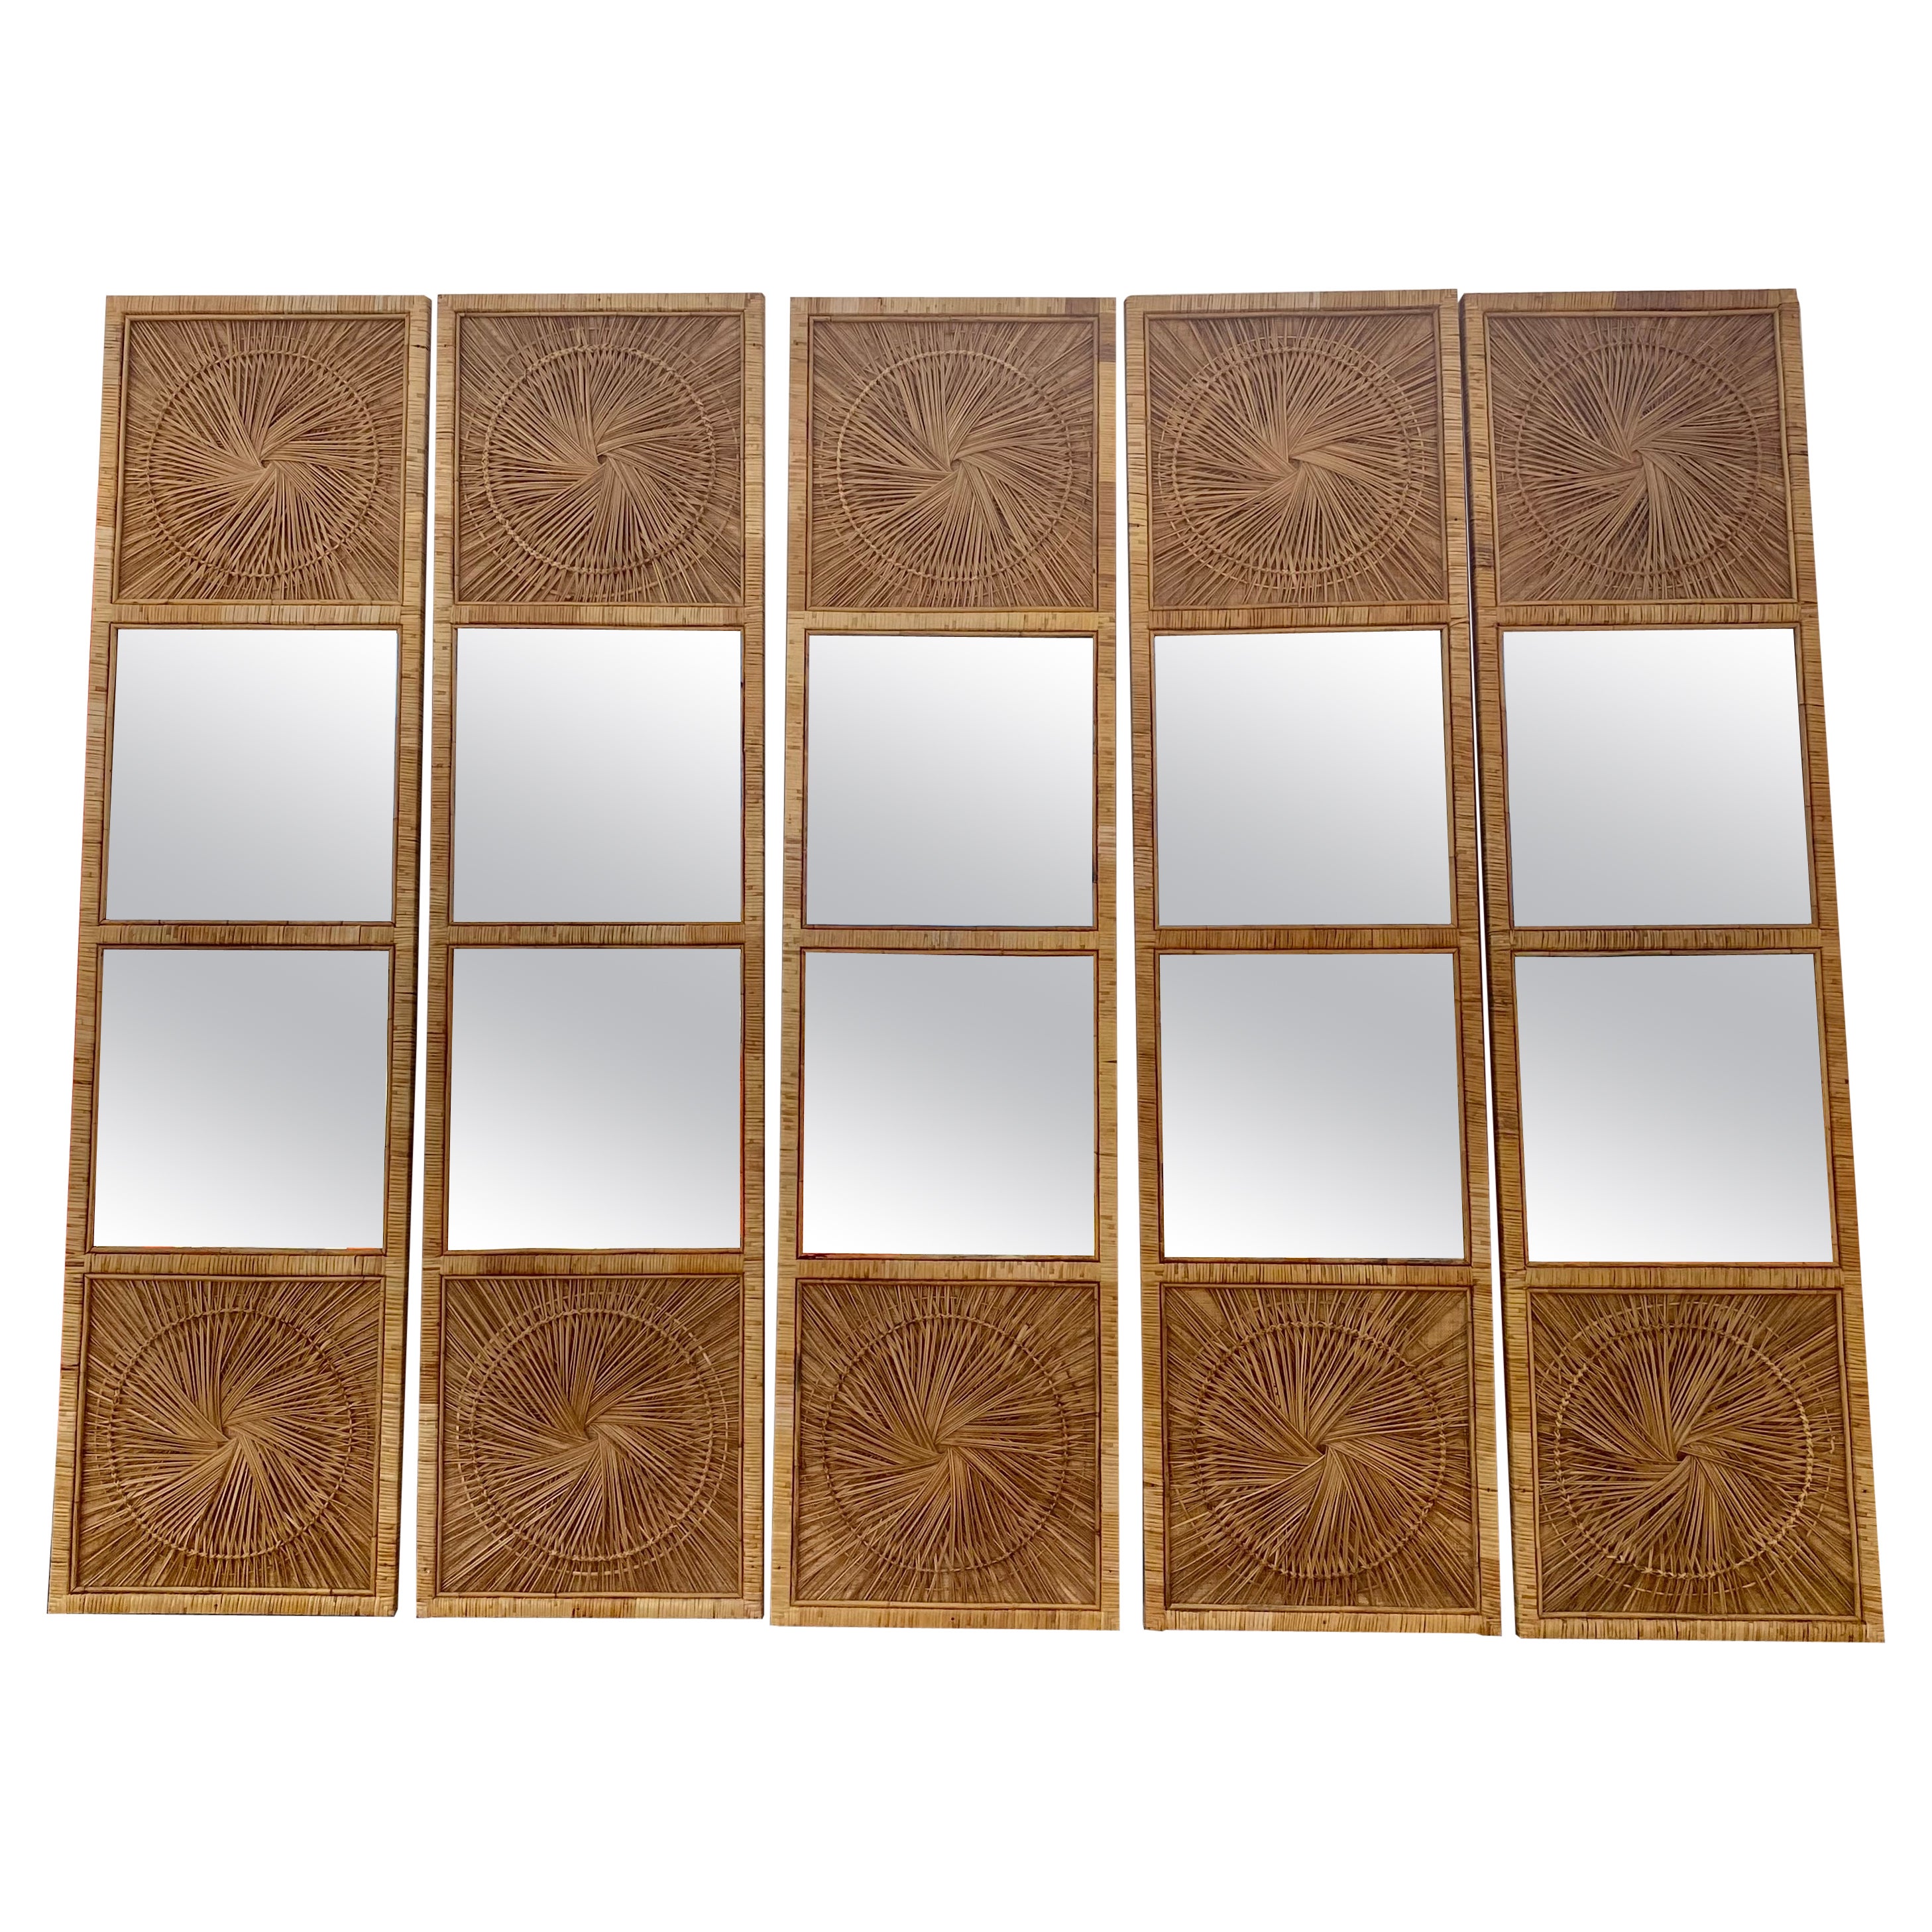 1970s Monumental Rattan Wicker Sunburst Wall Floor Mirror Panels